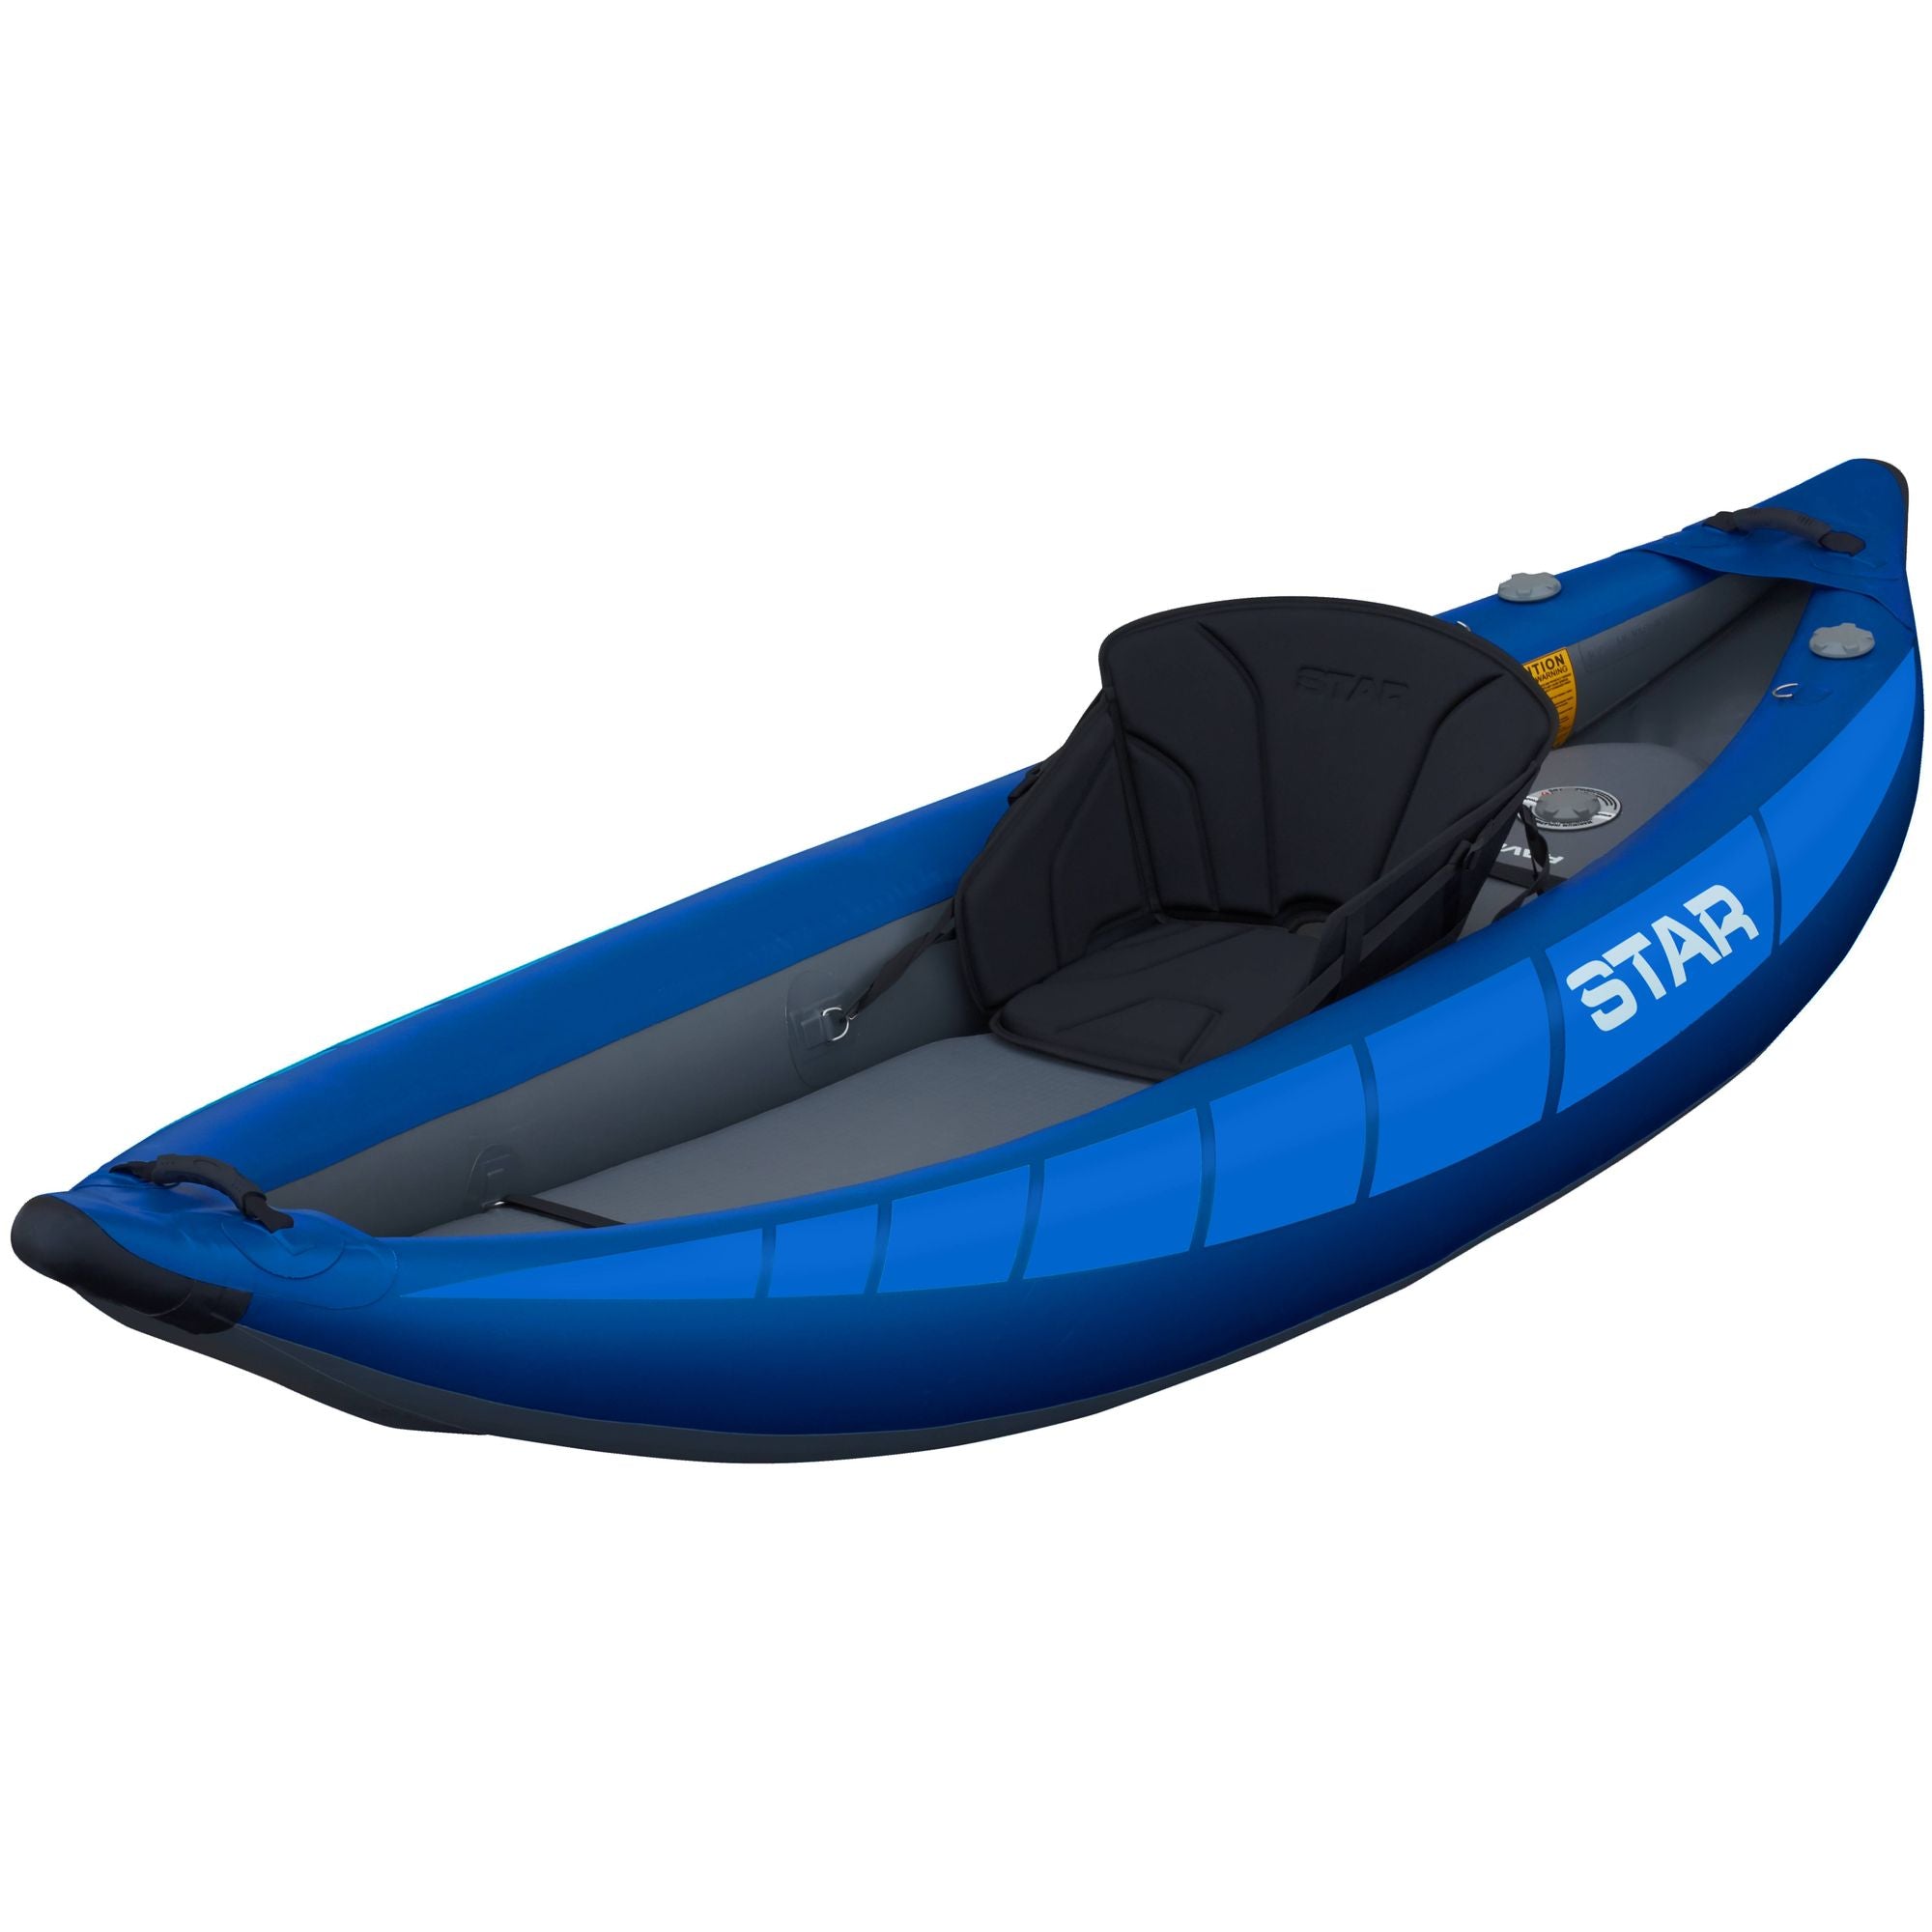 STAR Raven I Inflatable Kayak, Blue